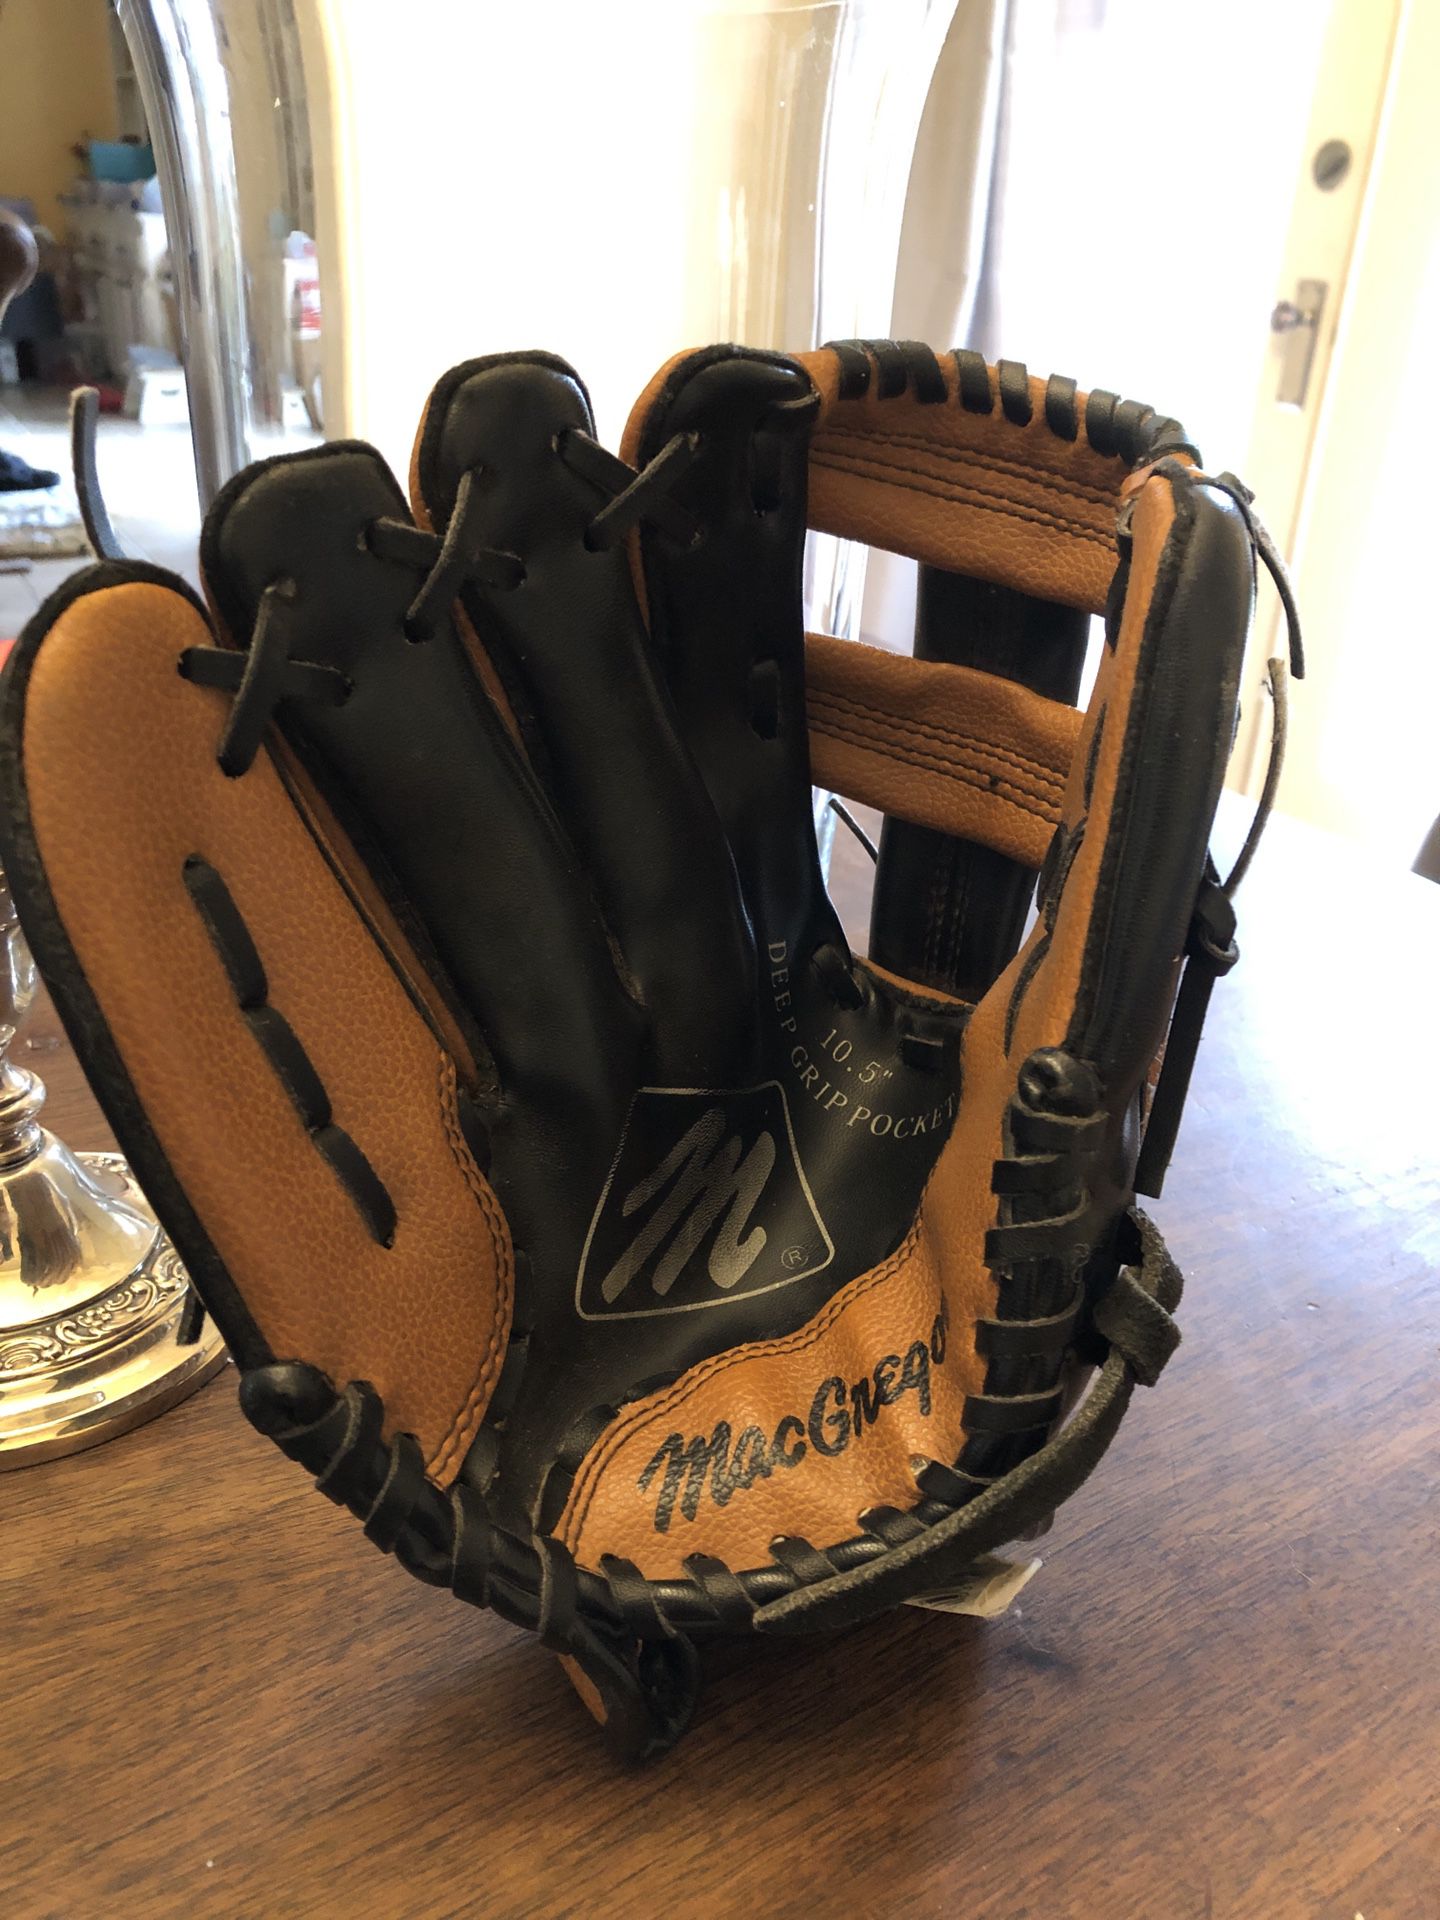 Mac Gregor 10.5” Kids baseball glove